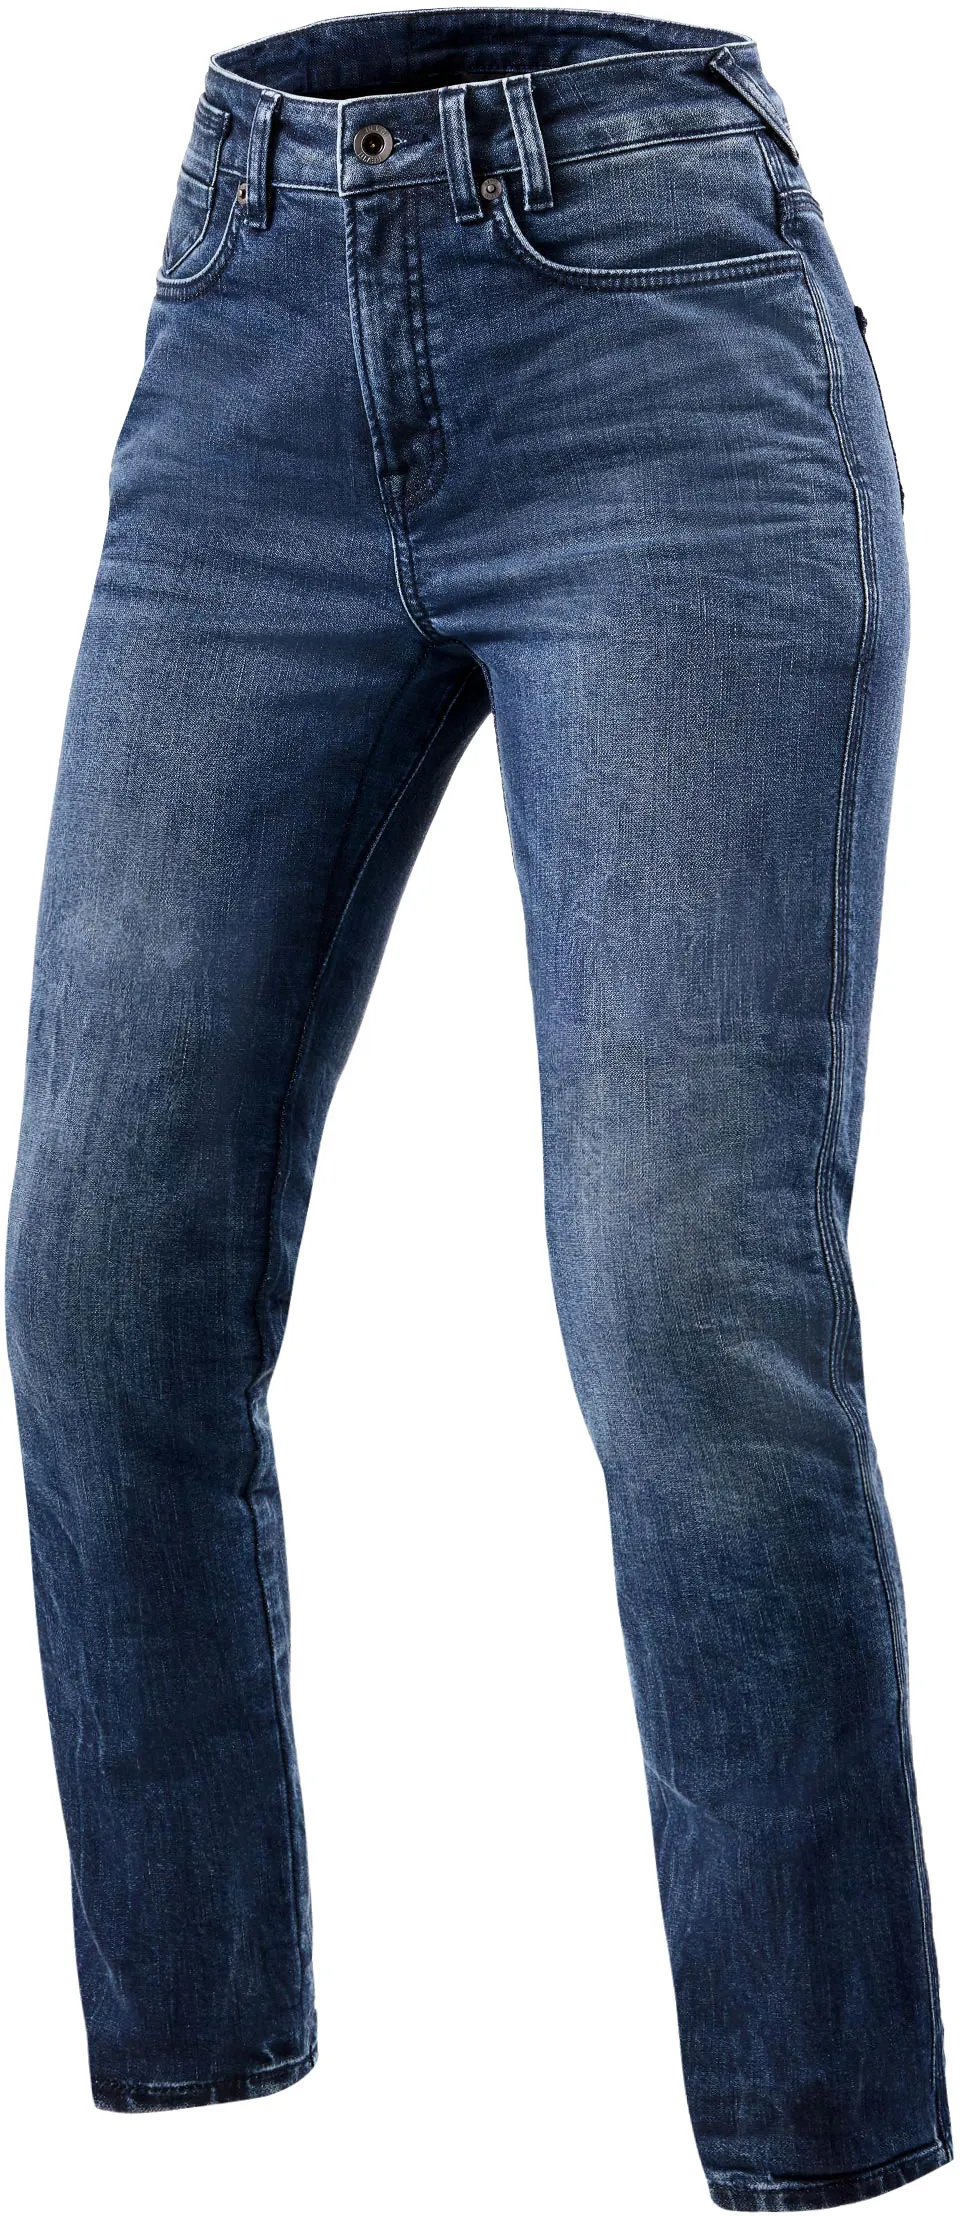 Revit Victoria 2, jeans femmes - Bleu - W27/L32